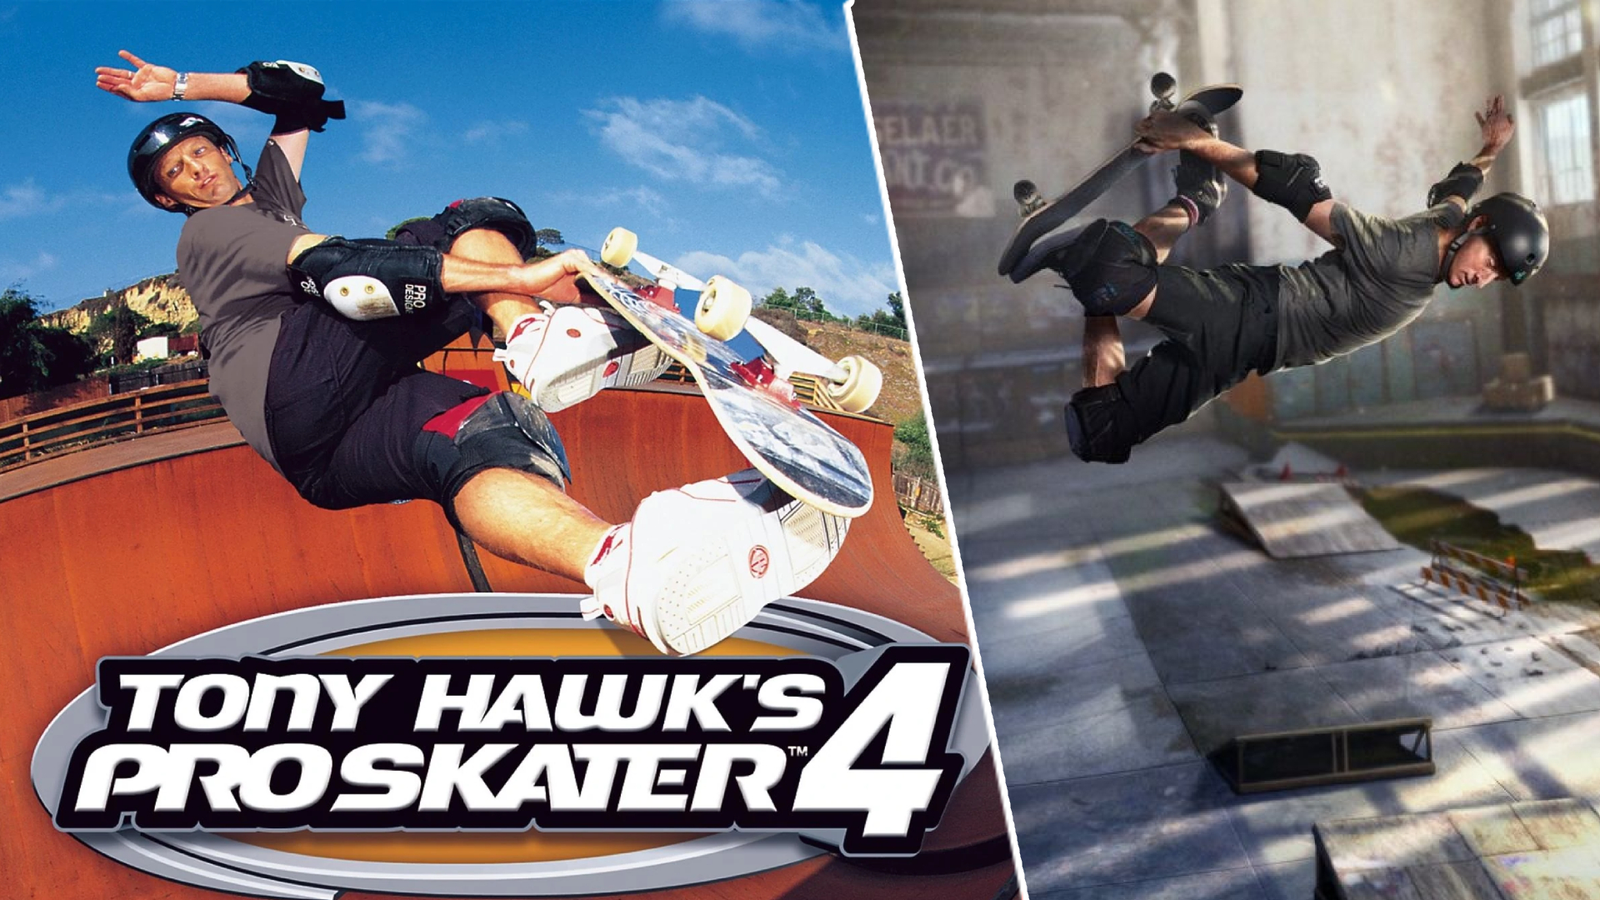 Tony Hawk's Pro Skater 1 + 2 - Official Reveal Trailer 